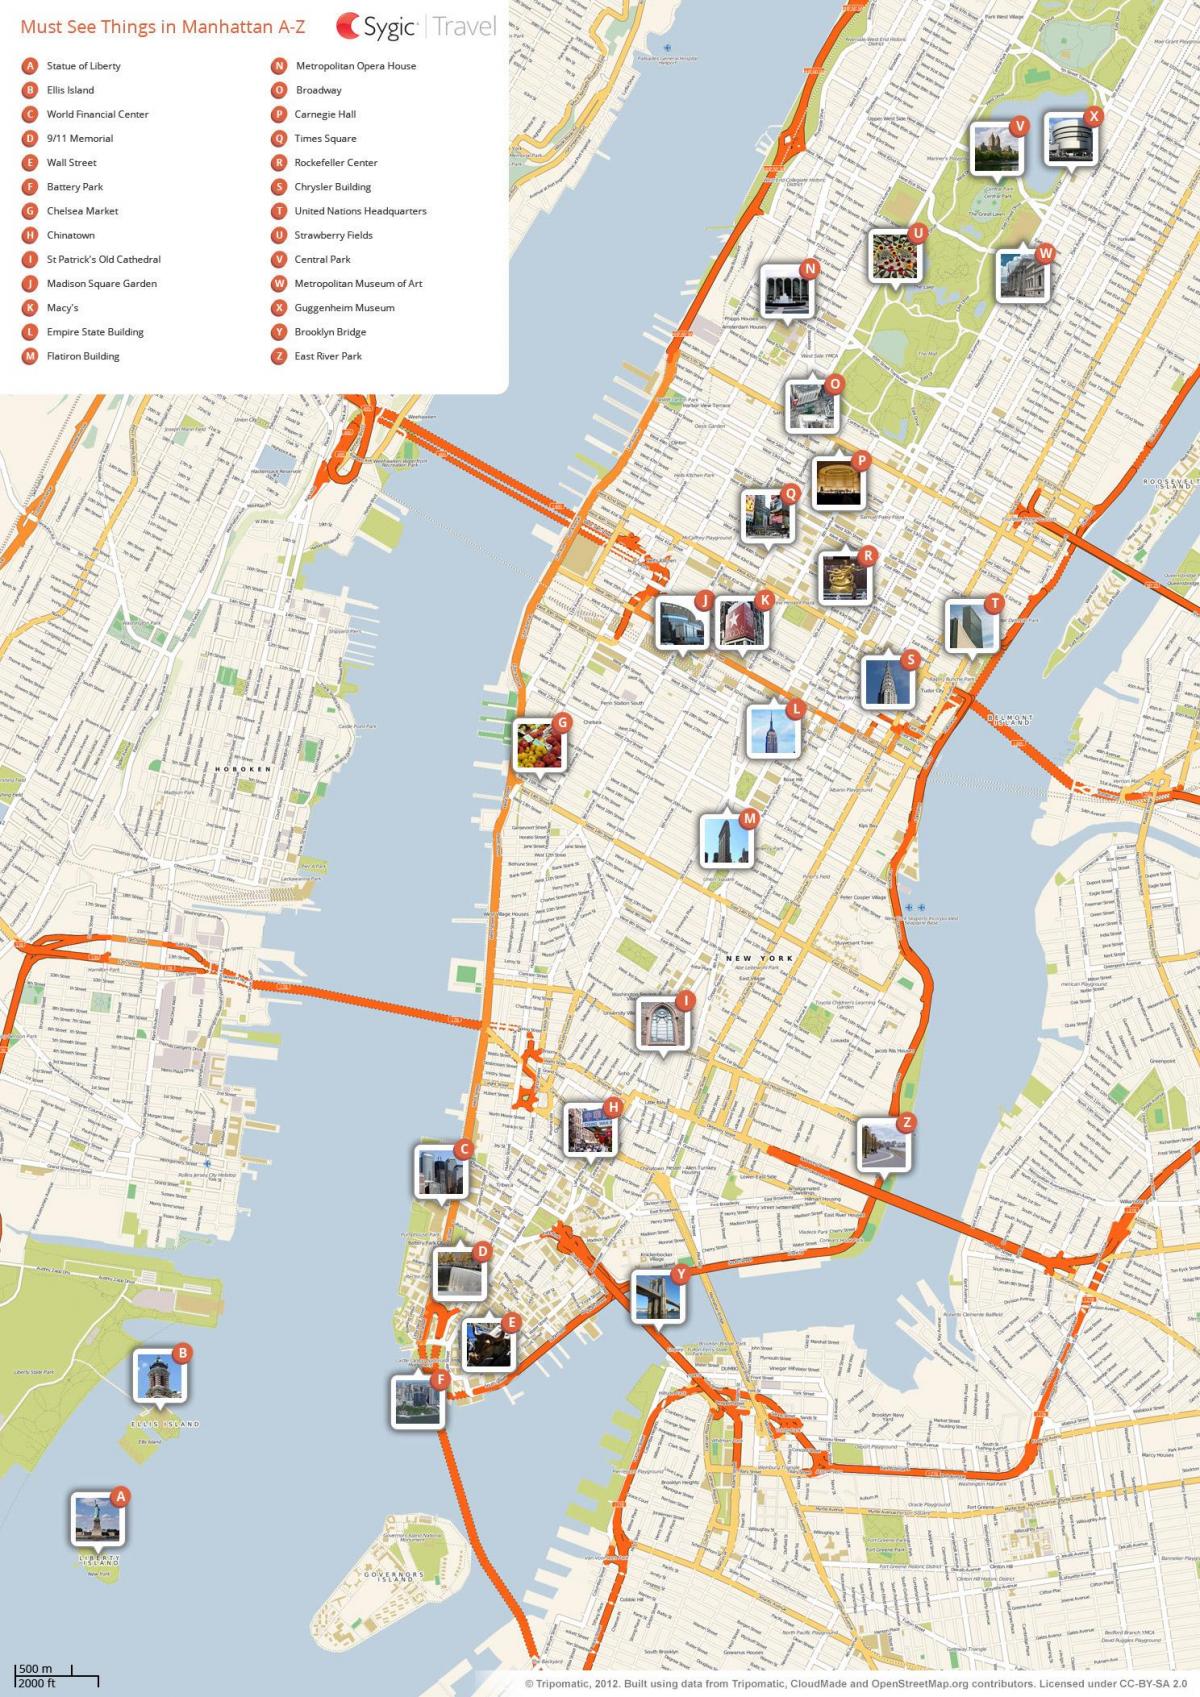 New York City turistických atrakcí mapě